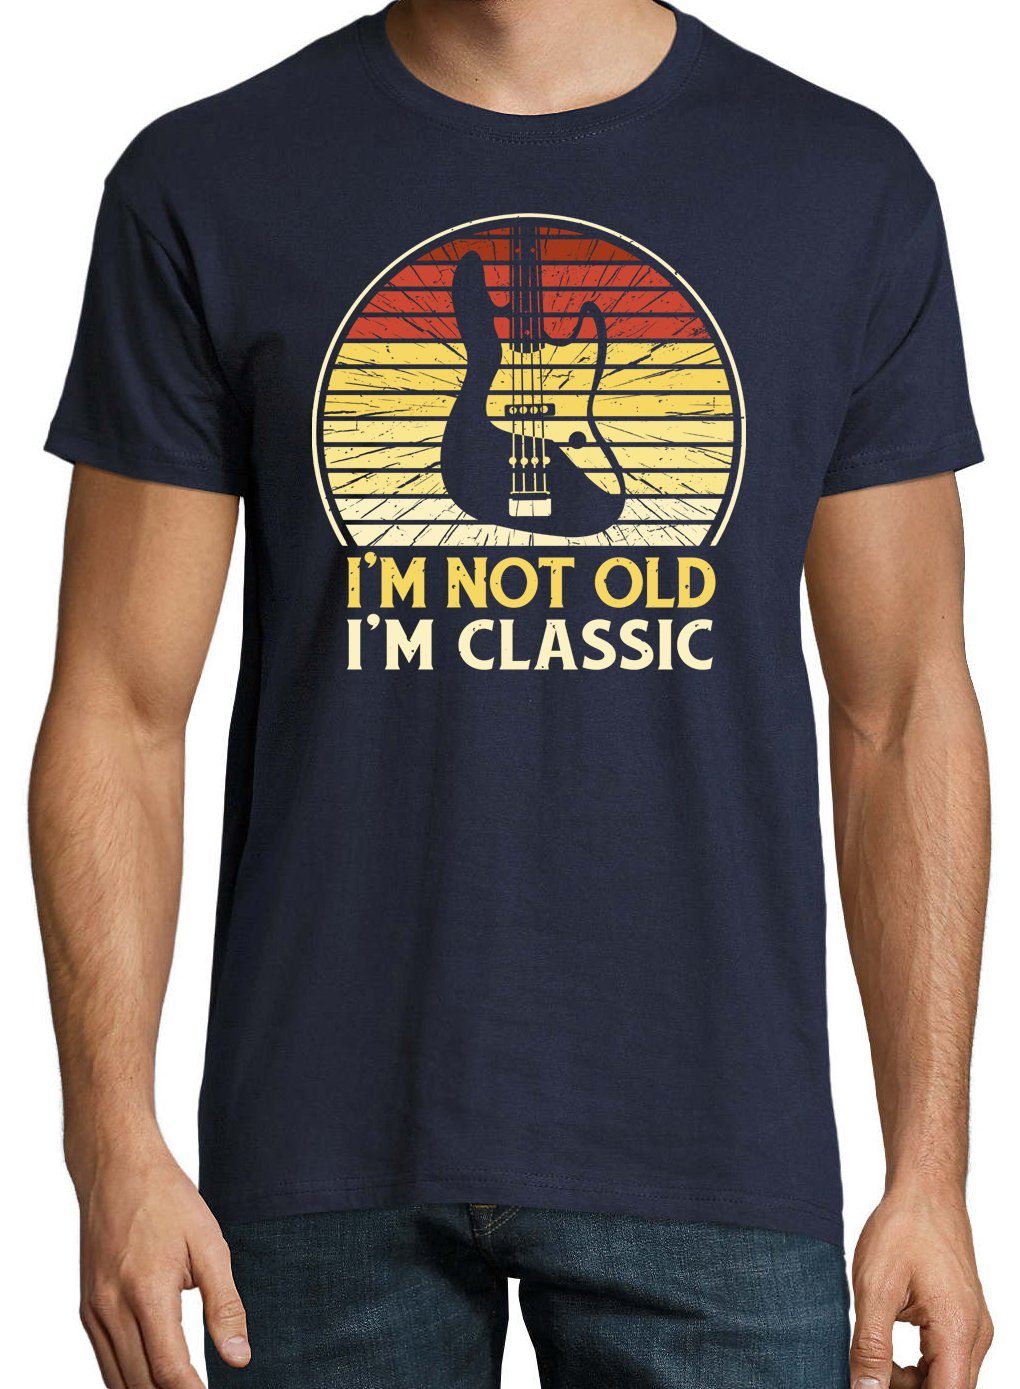 Youth Designz T-Shirt "I´m Not mit I´m Frontprint Navyblau Herren Old, Bass Classic" trendigem Shirt